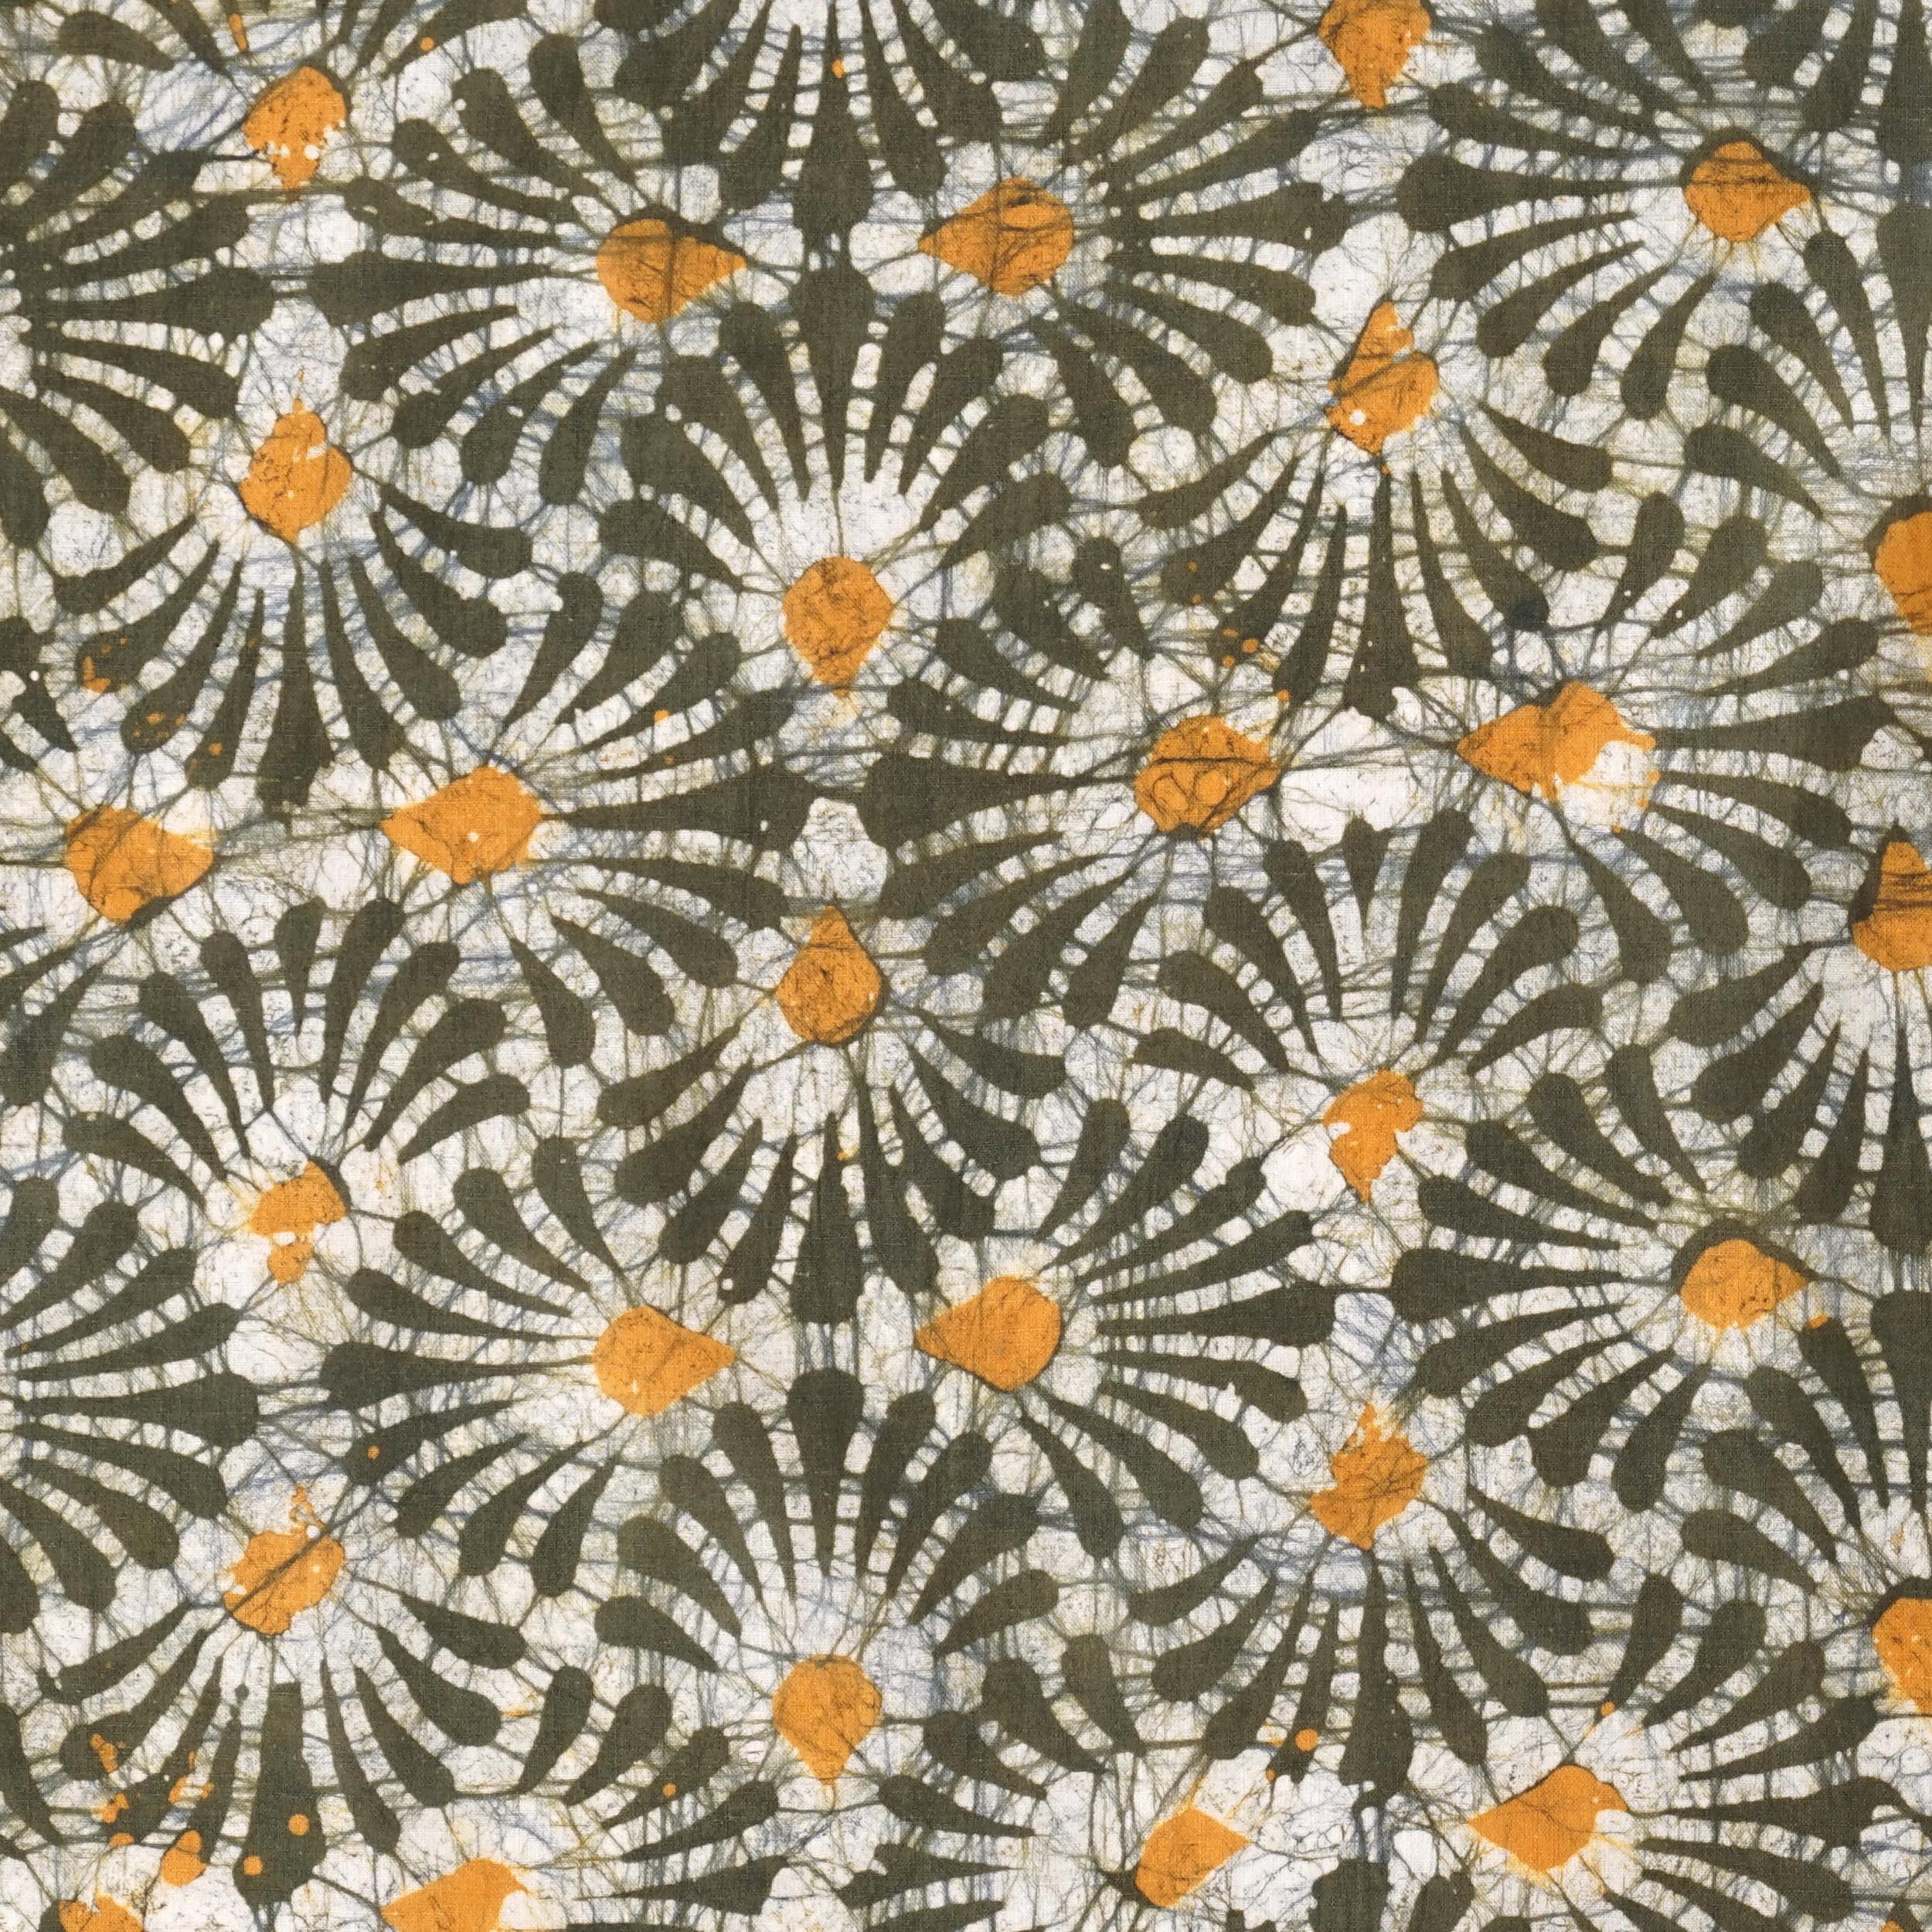 100% Block-Printed Batik Cotton Fabric From India - Clackers Motif - Flat